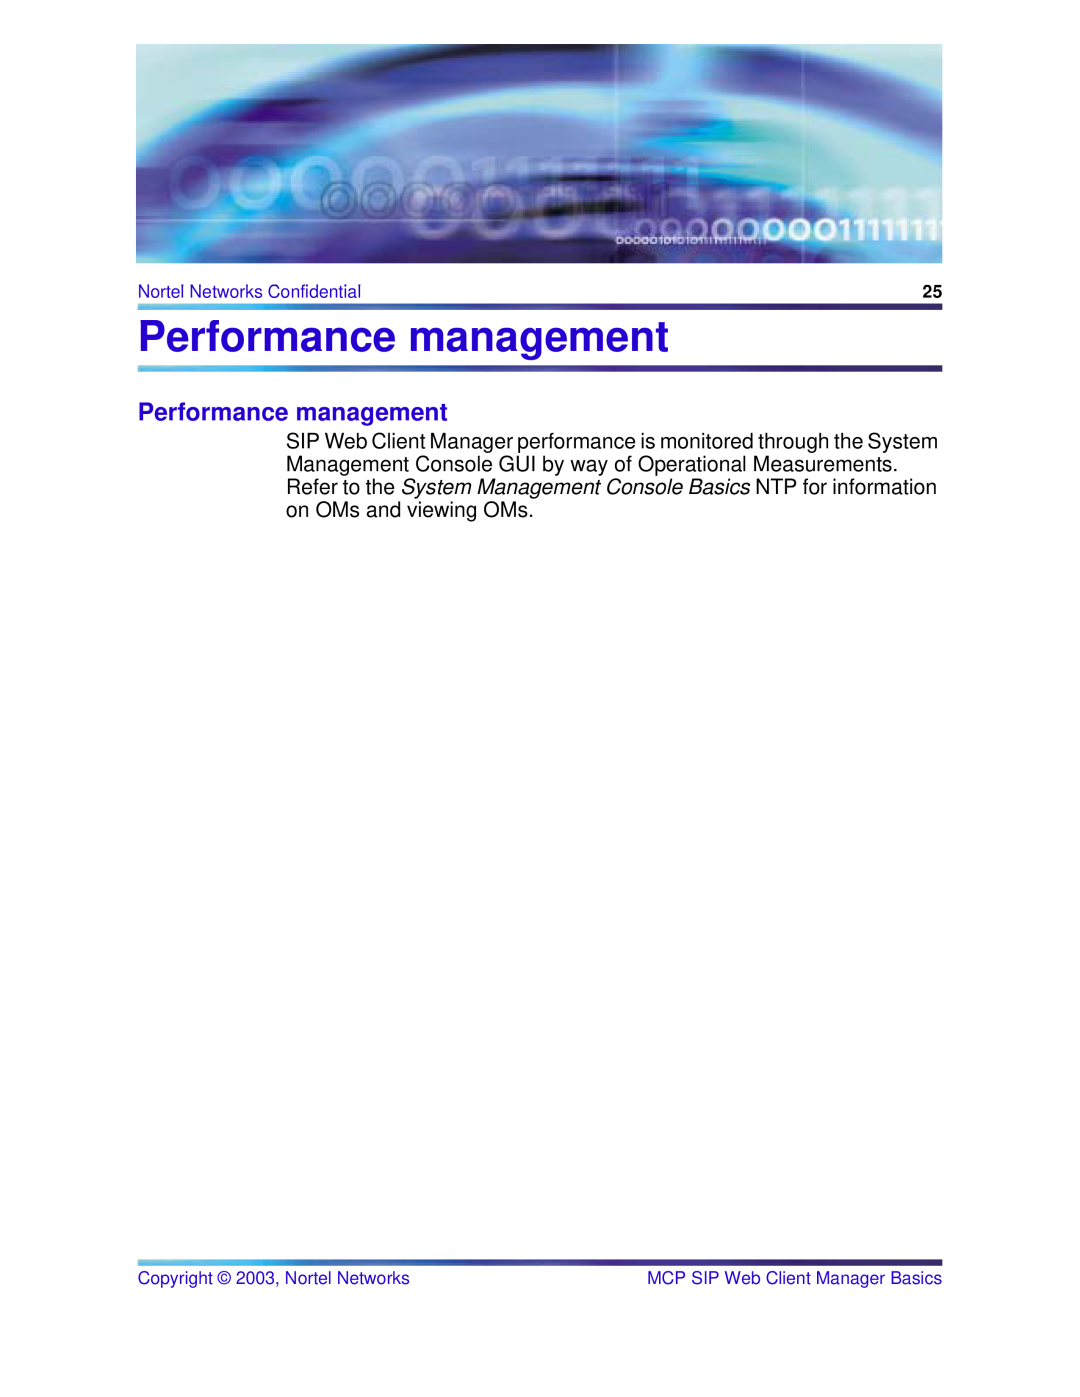 Nortel Networks NN10277-111 manual Performance management, Nortel Networks Confidential, Copyright 2003, Nortel Networks 